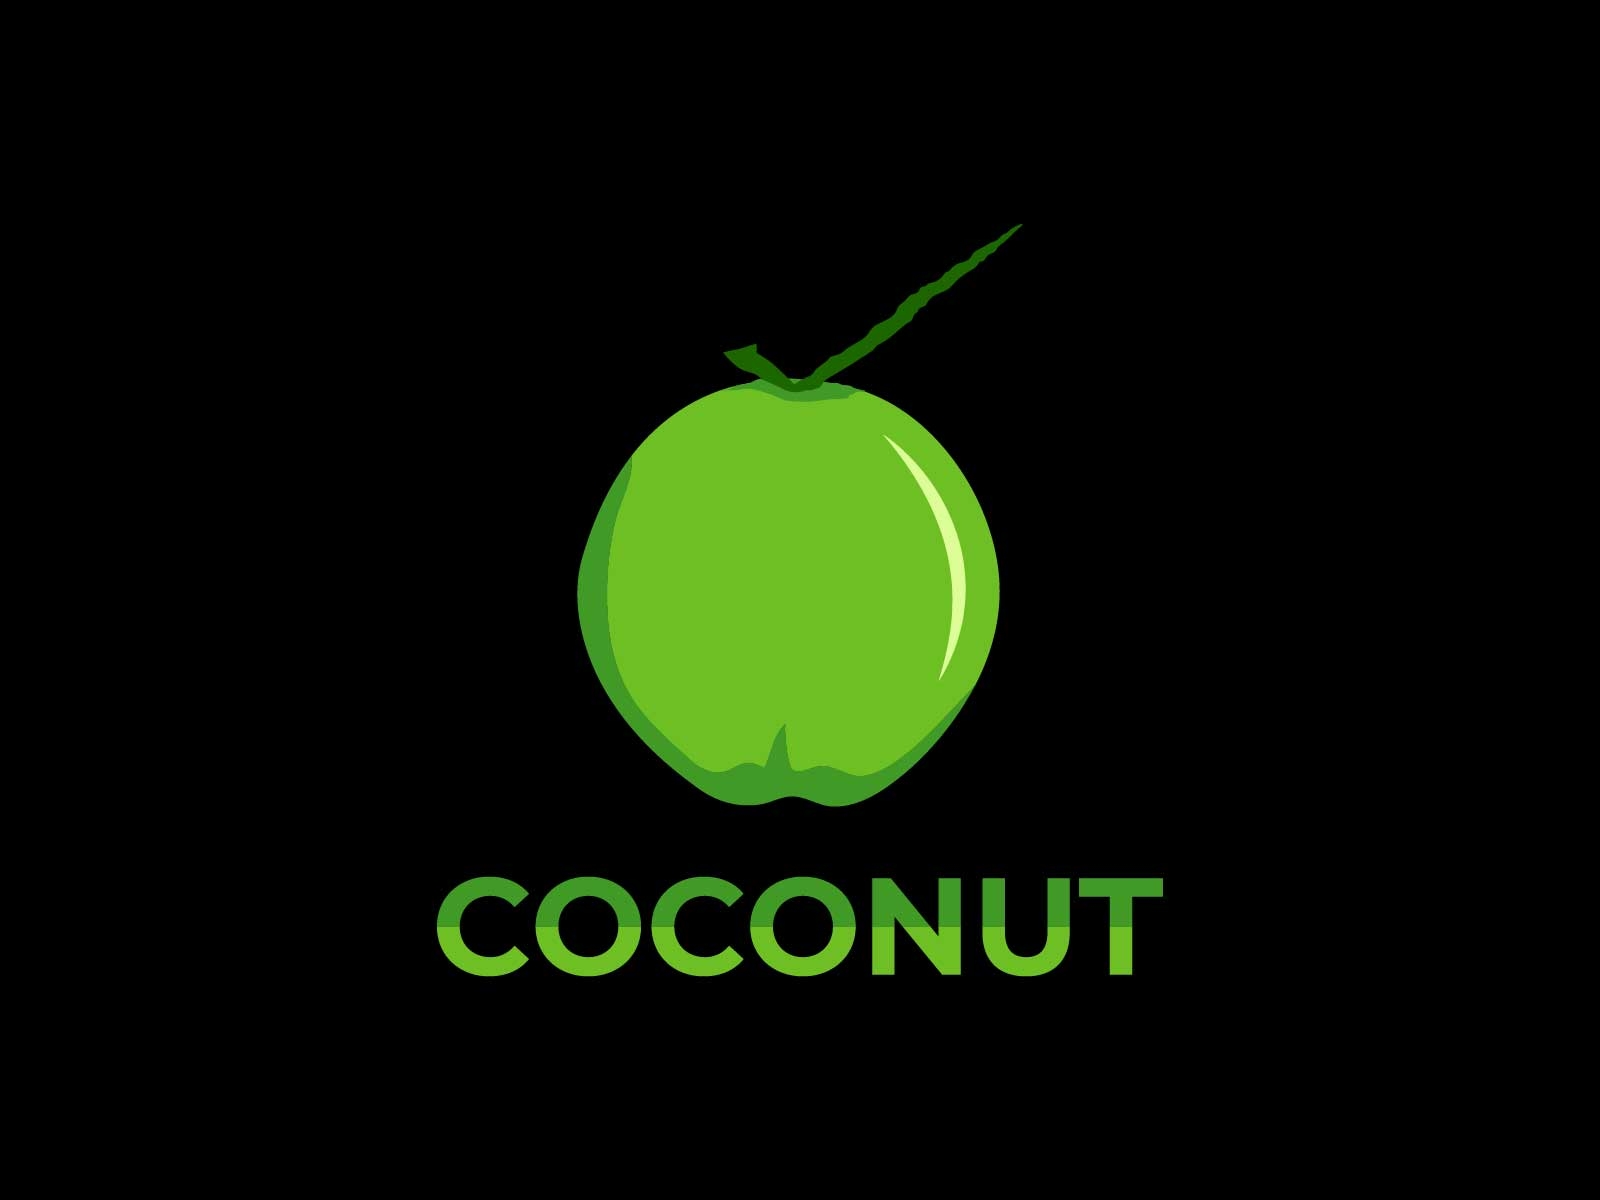 Coconut Logo Graphic by Friendesigns · Creative Fabrica